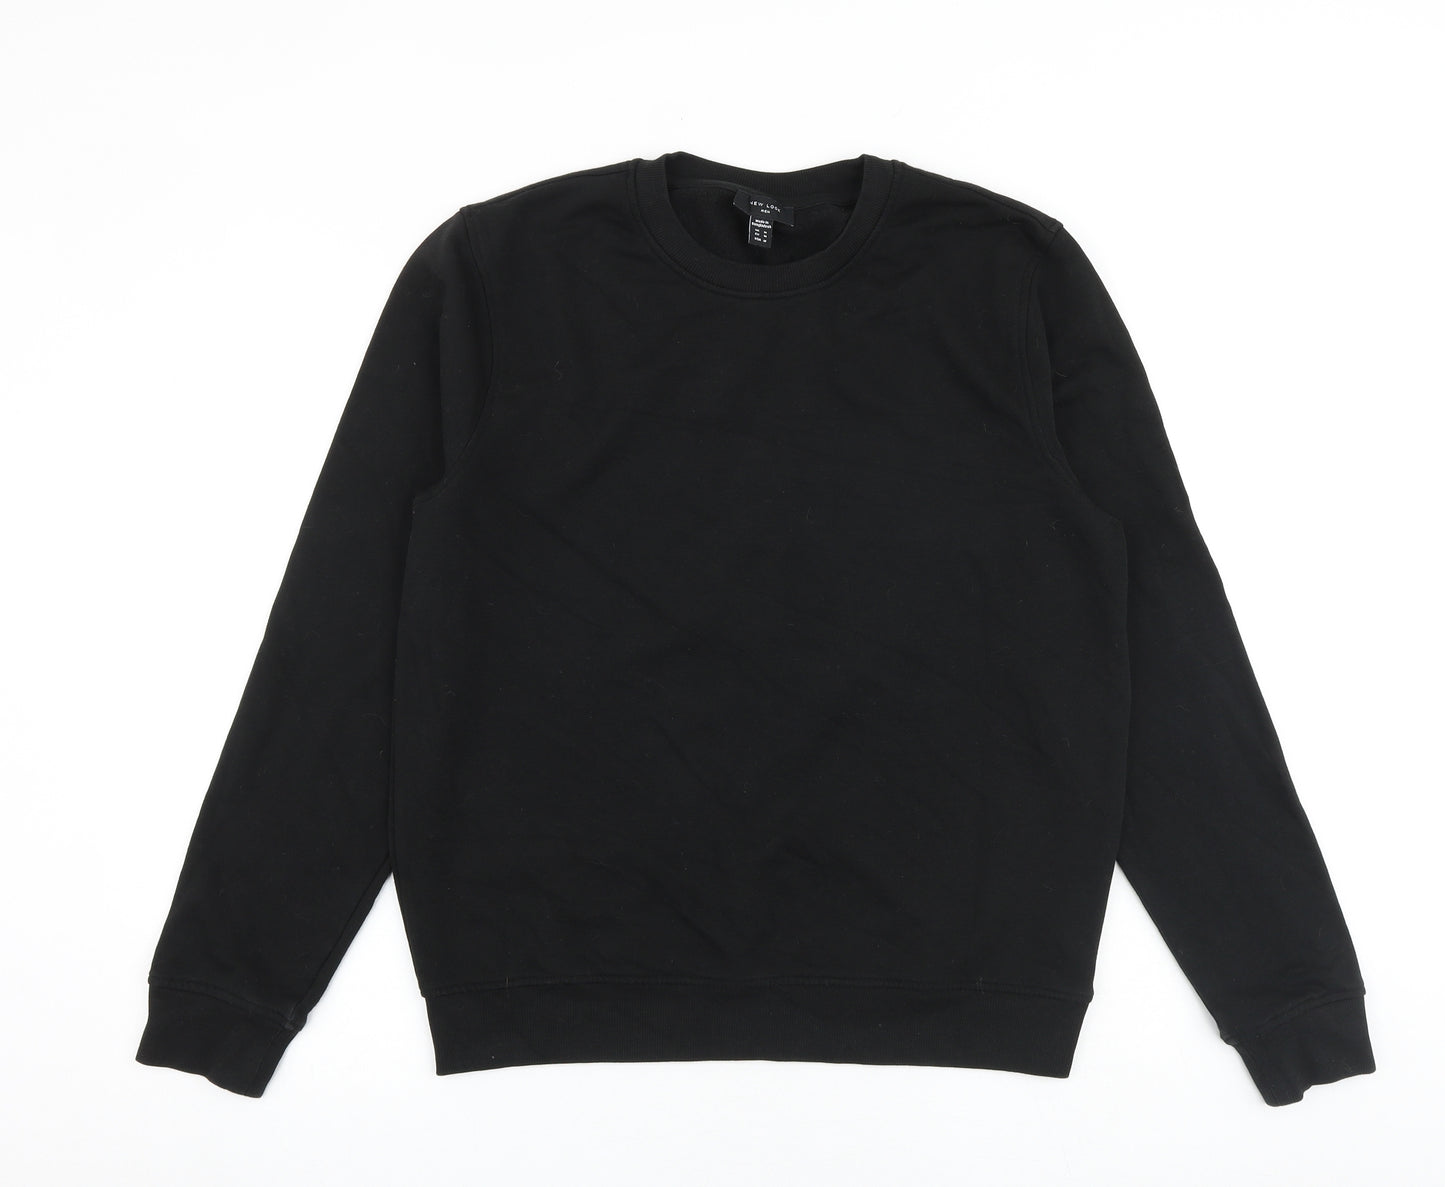 New Look Mens Black Cotton Pullover Sweatshirt Size M